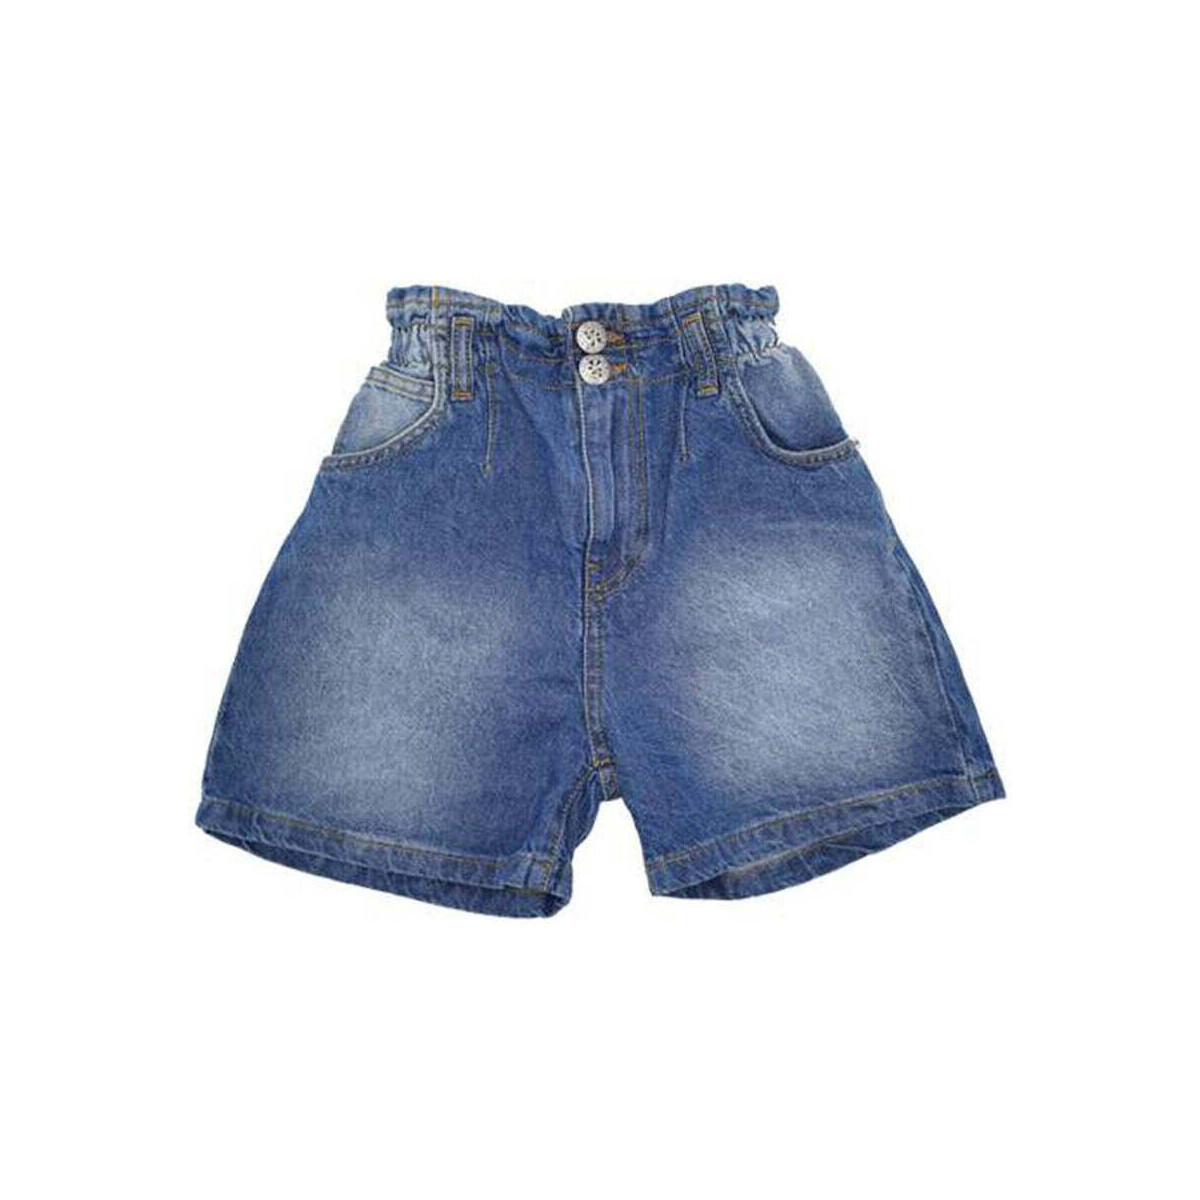 Vêtements Fille Shorts / Bermudas Richmond  Bleu